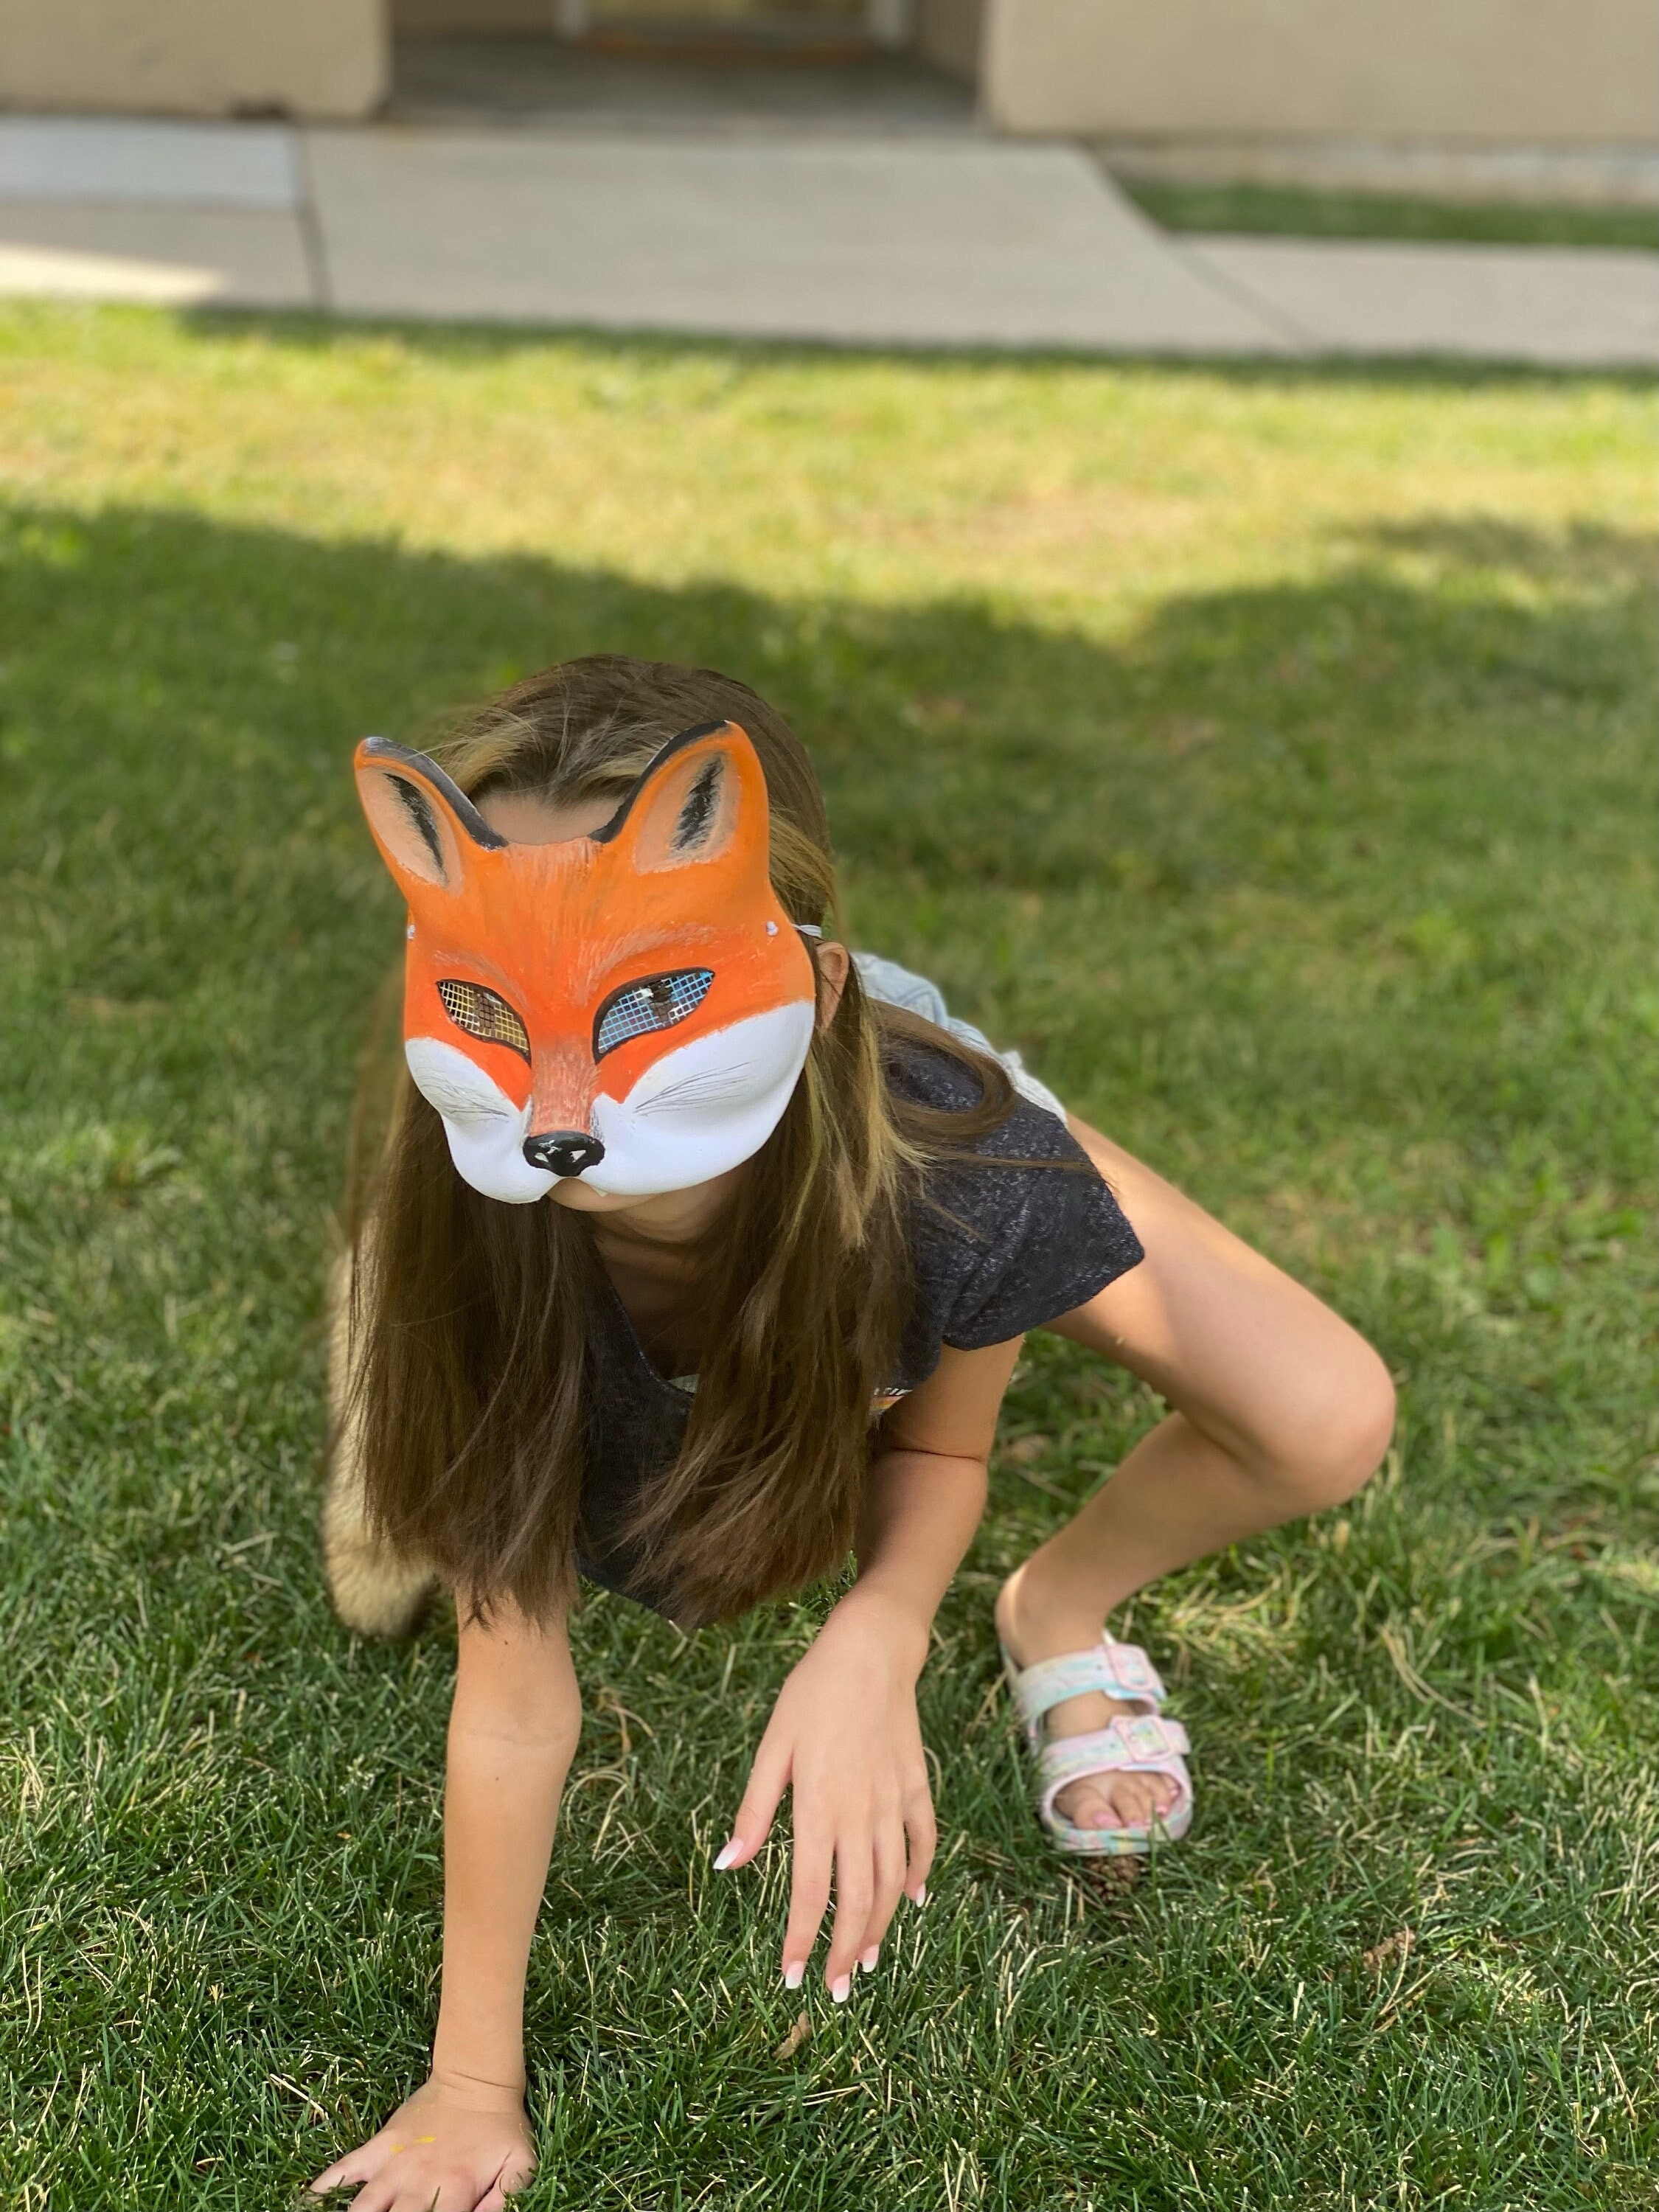  KUYYFDS Therian Mask Halloween Fox Mask Leather DIY